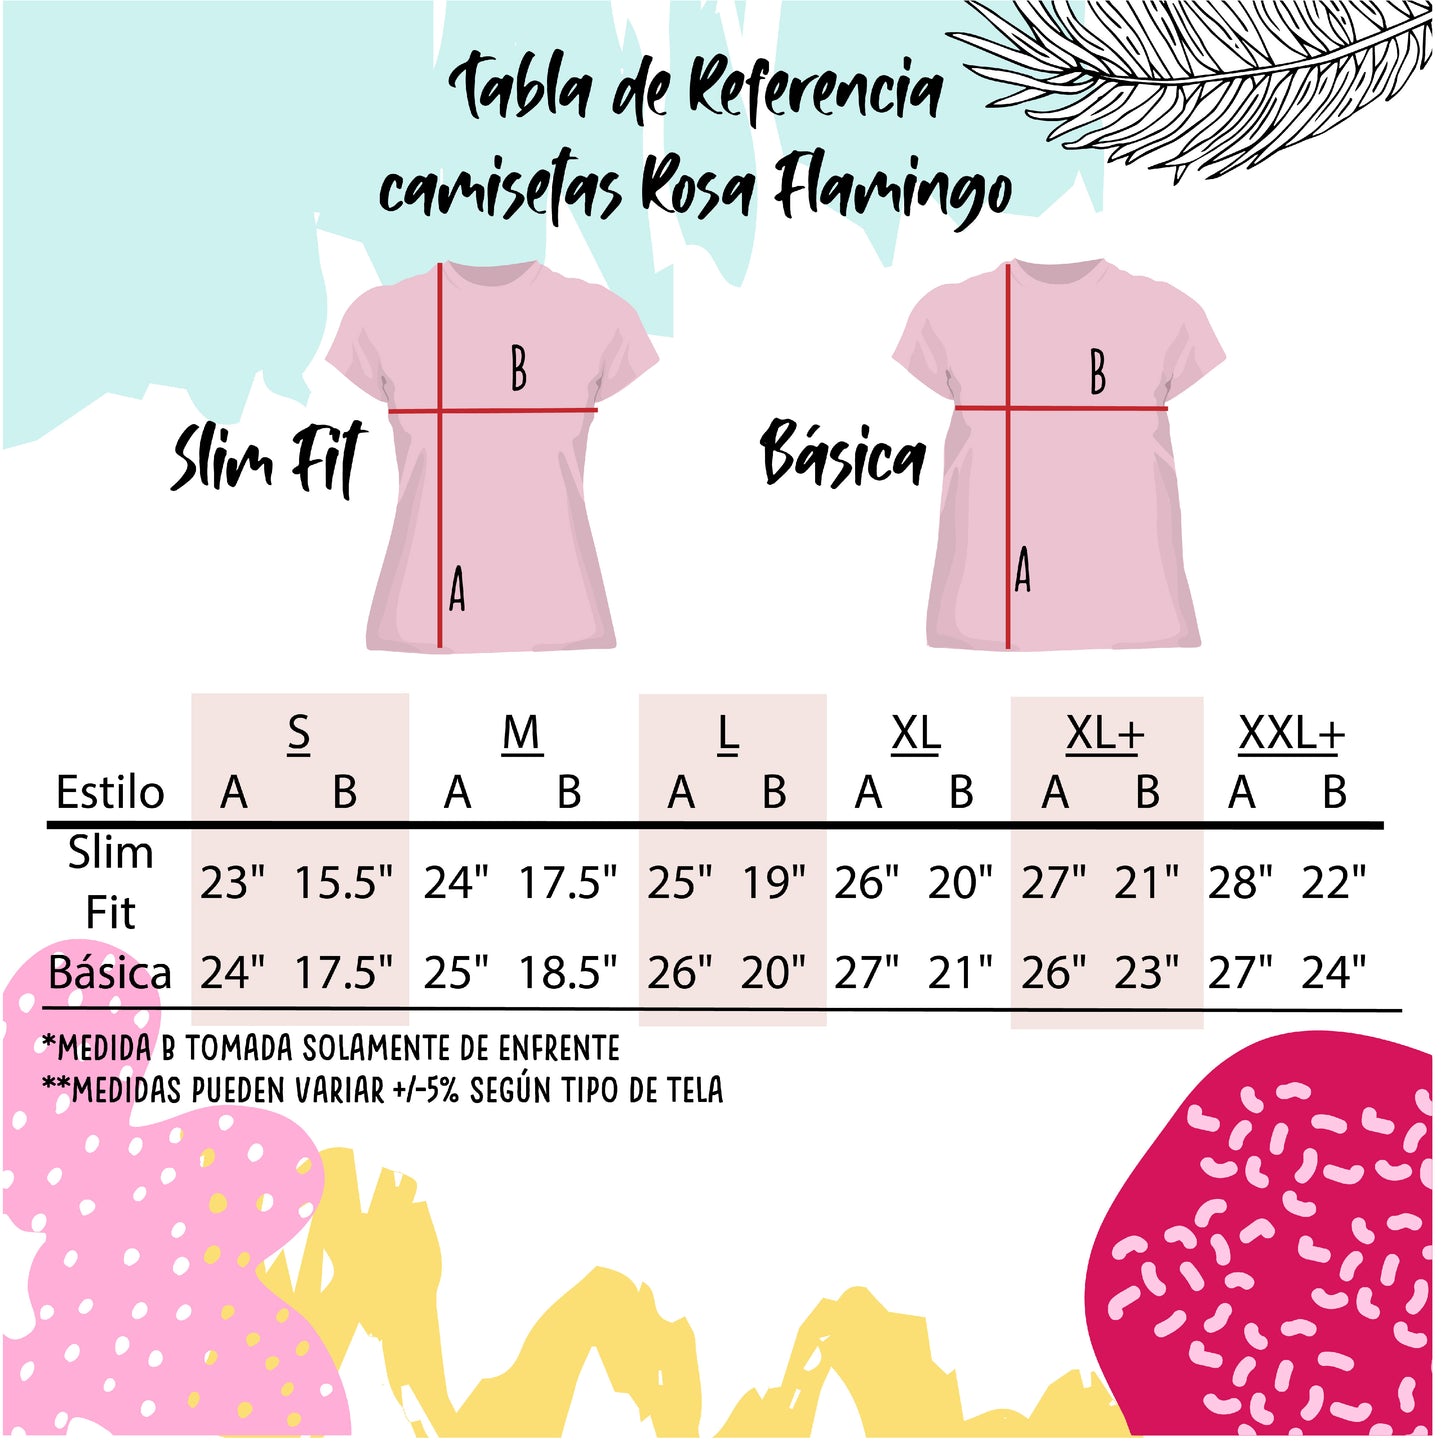 Honduras Pink Mapa Lentejuelas Reversible Camiseta Mujer